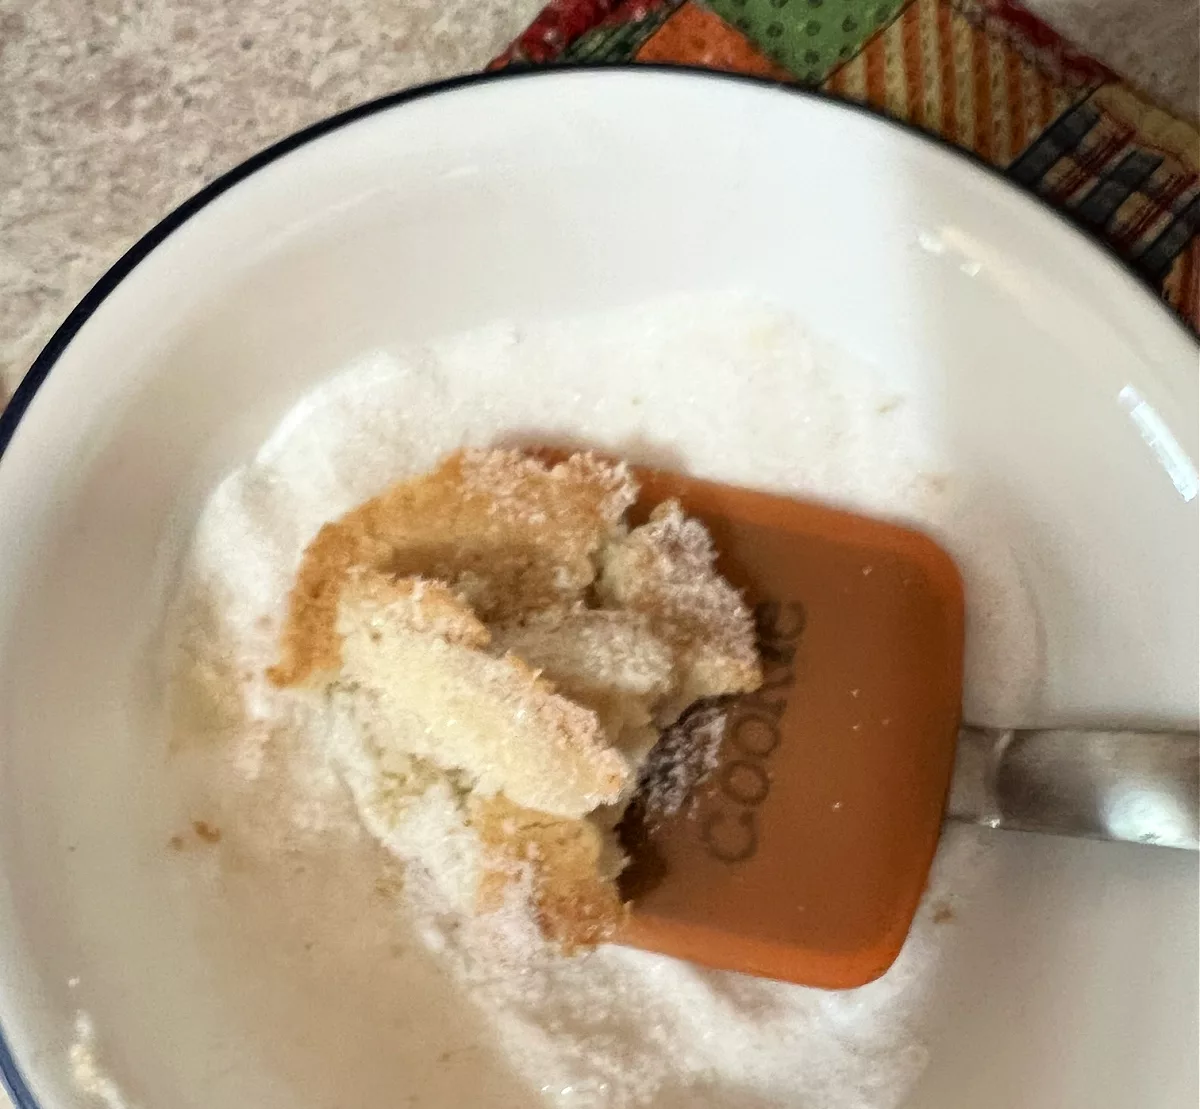 broken Cookie in a bowl of sugar